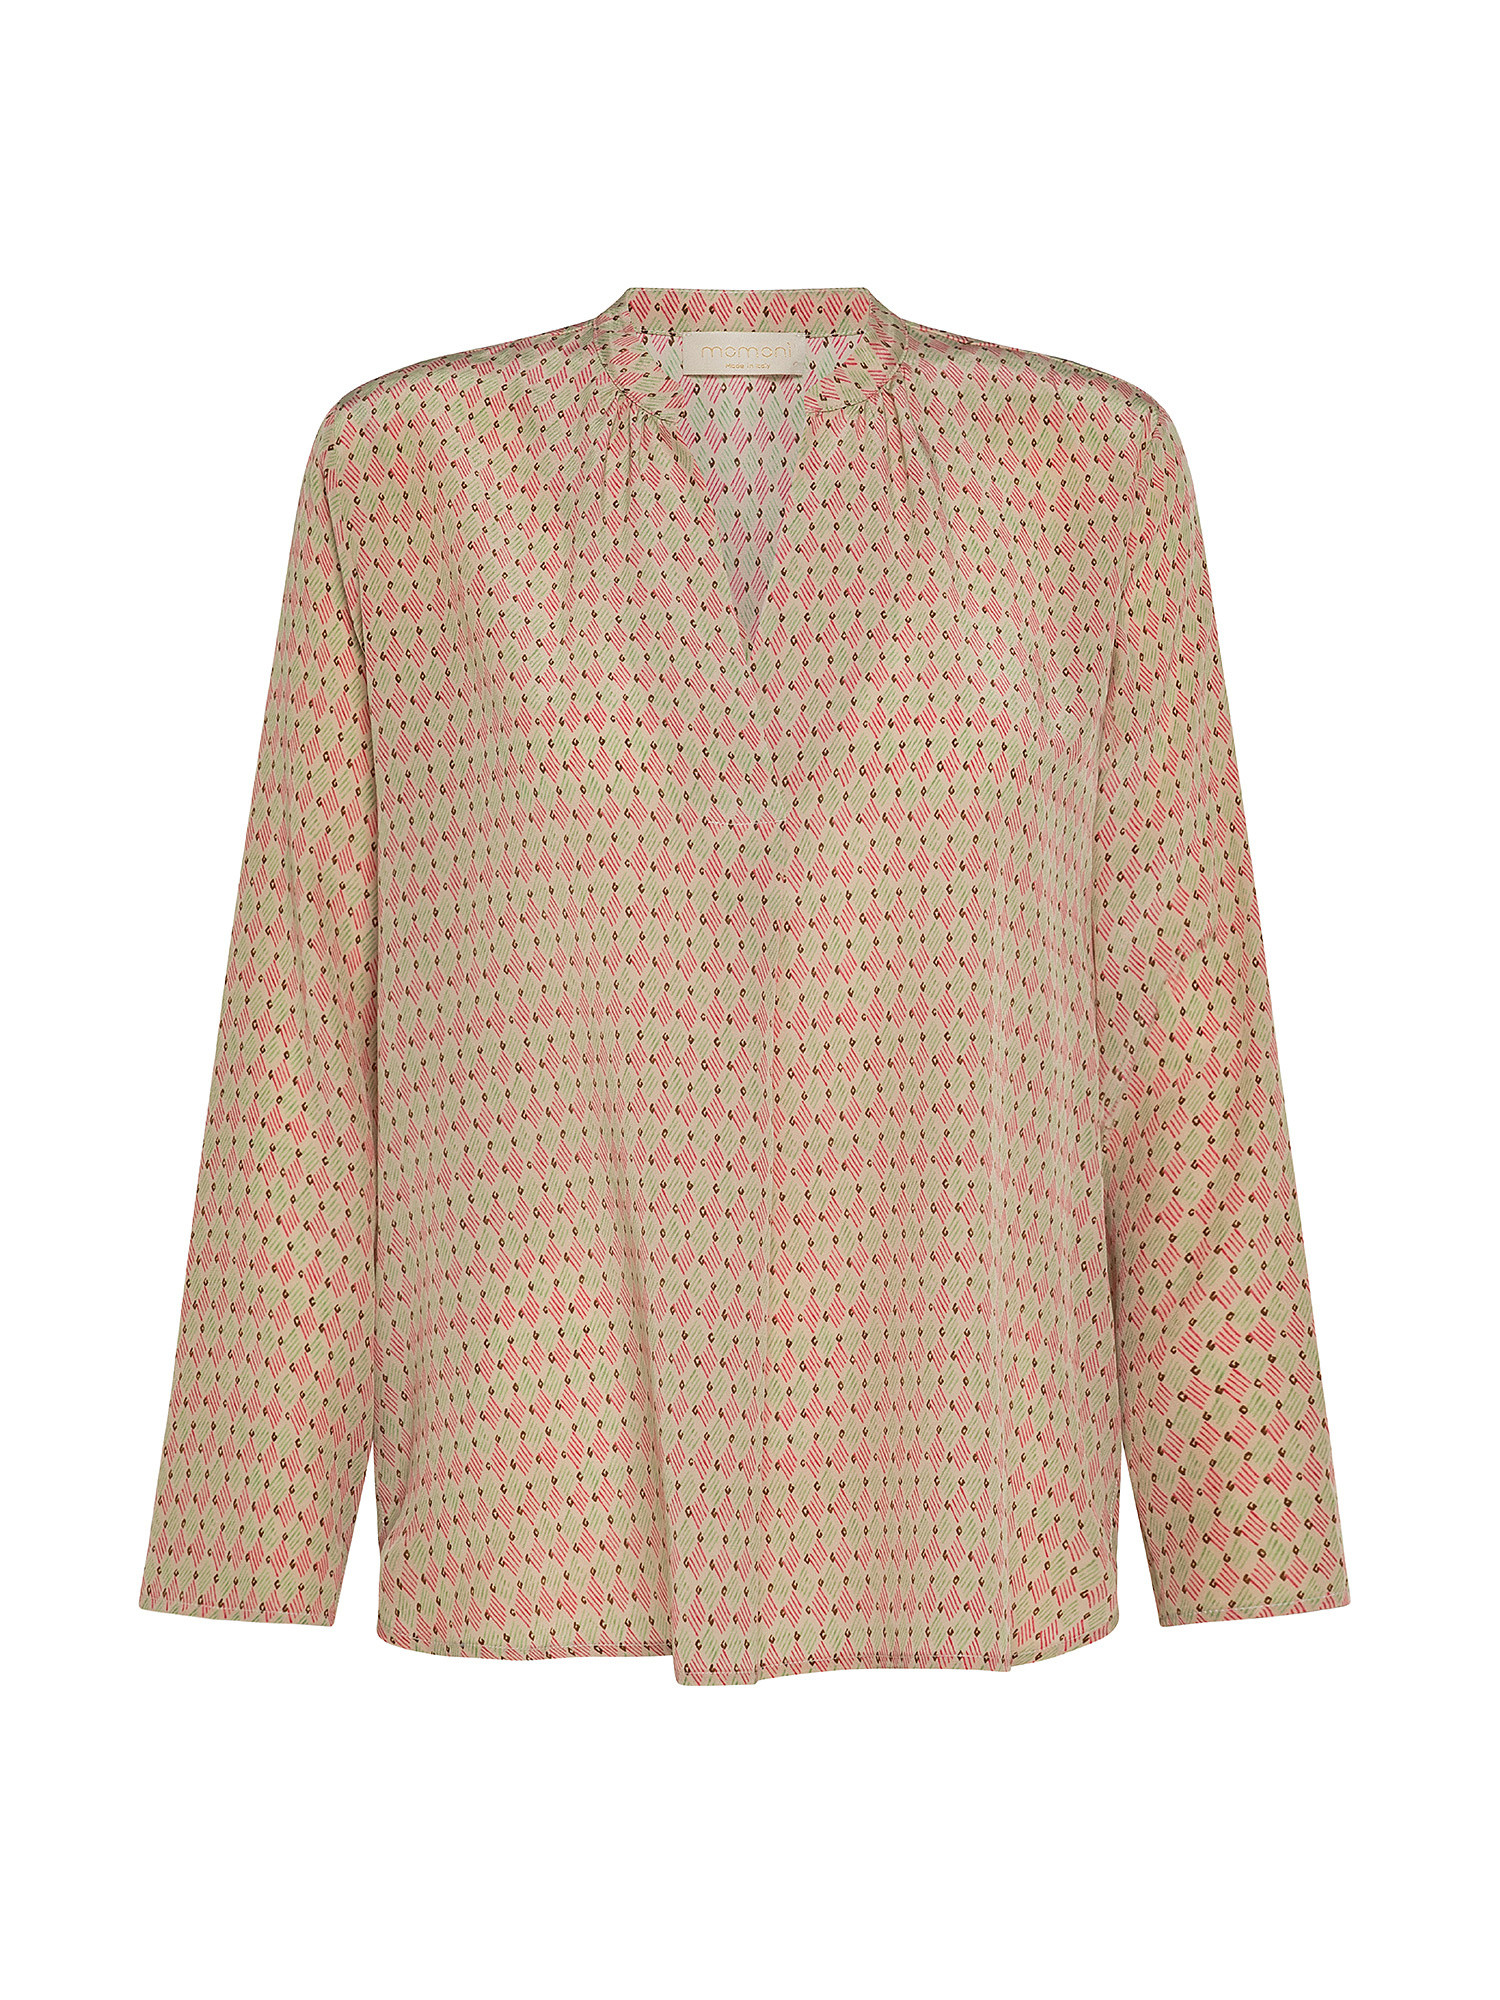 Berkeley blouse in printed silk crepe de chine, Pink, large image number 0